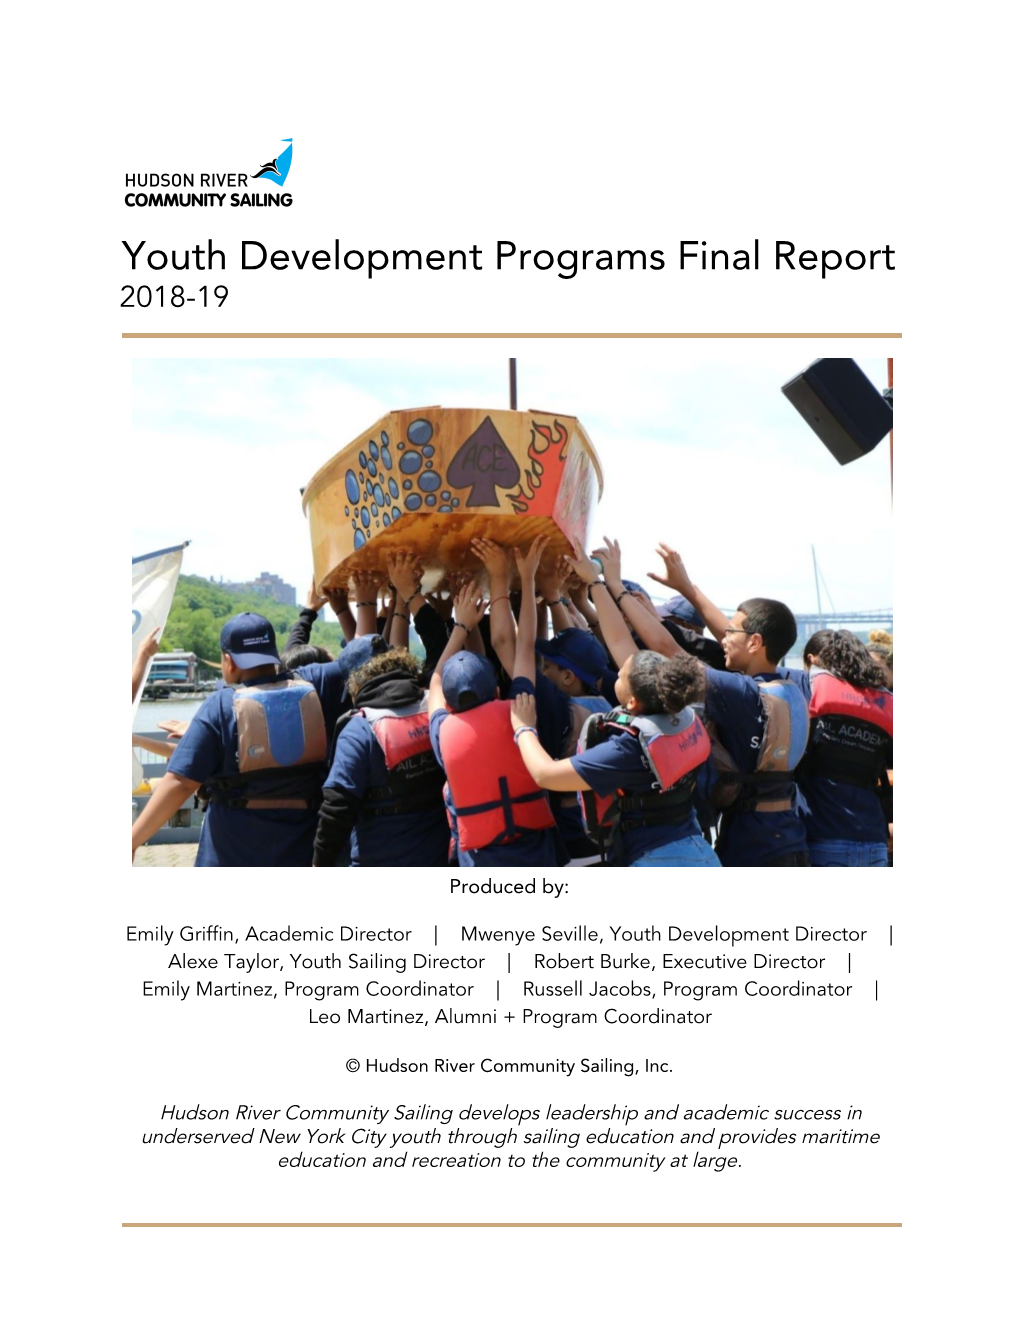 Youth Development Programs Final Report 2018-19